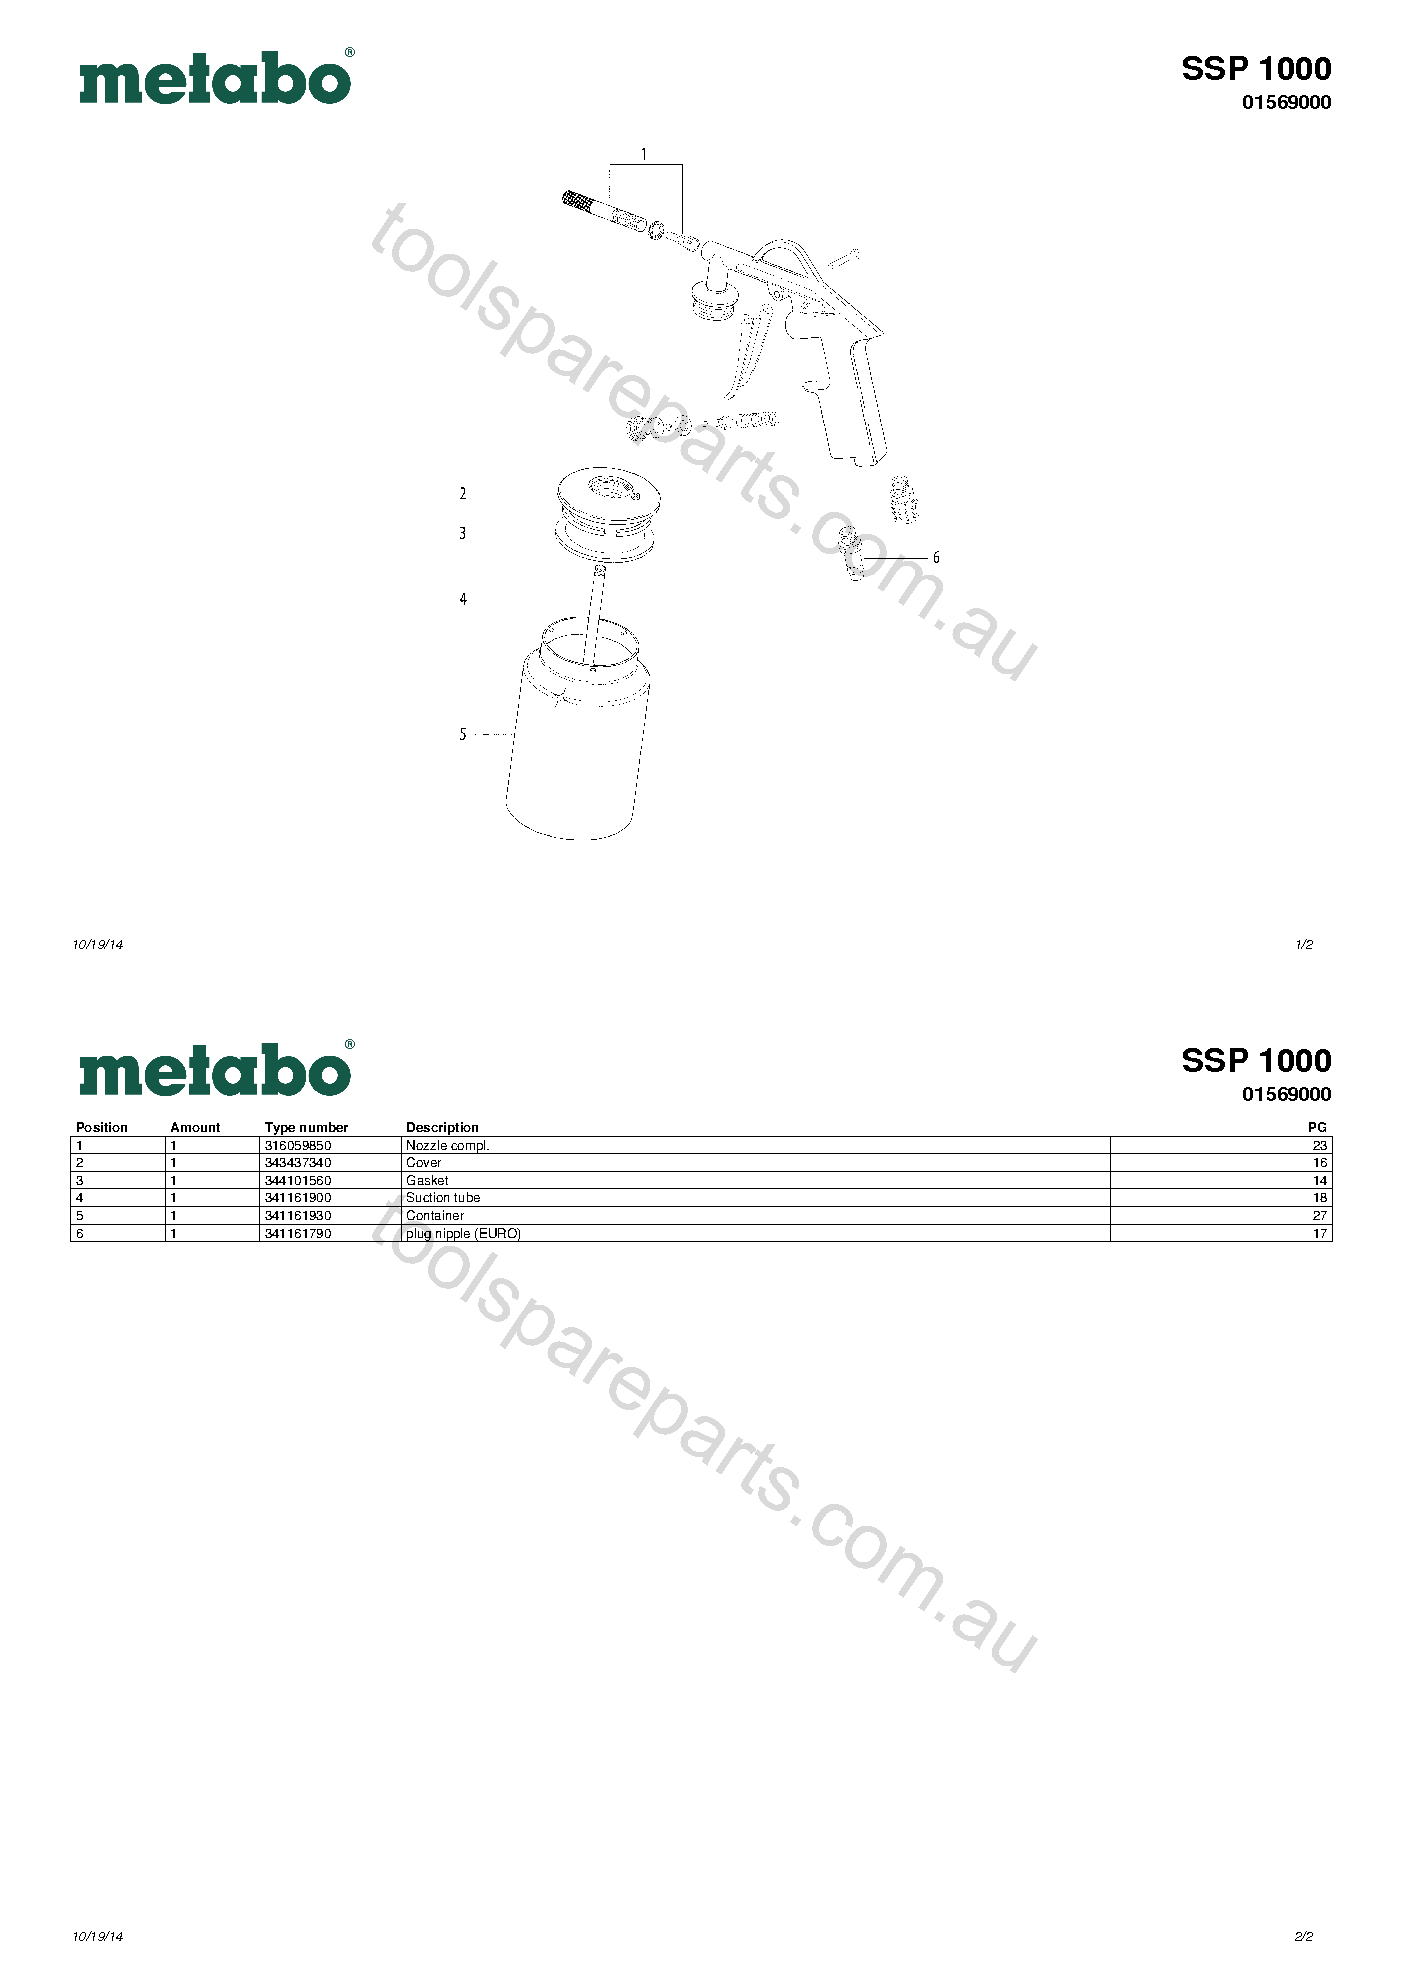 Metabo SSP 1000 01569000  Diagram 1